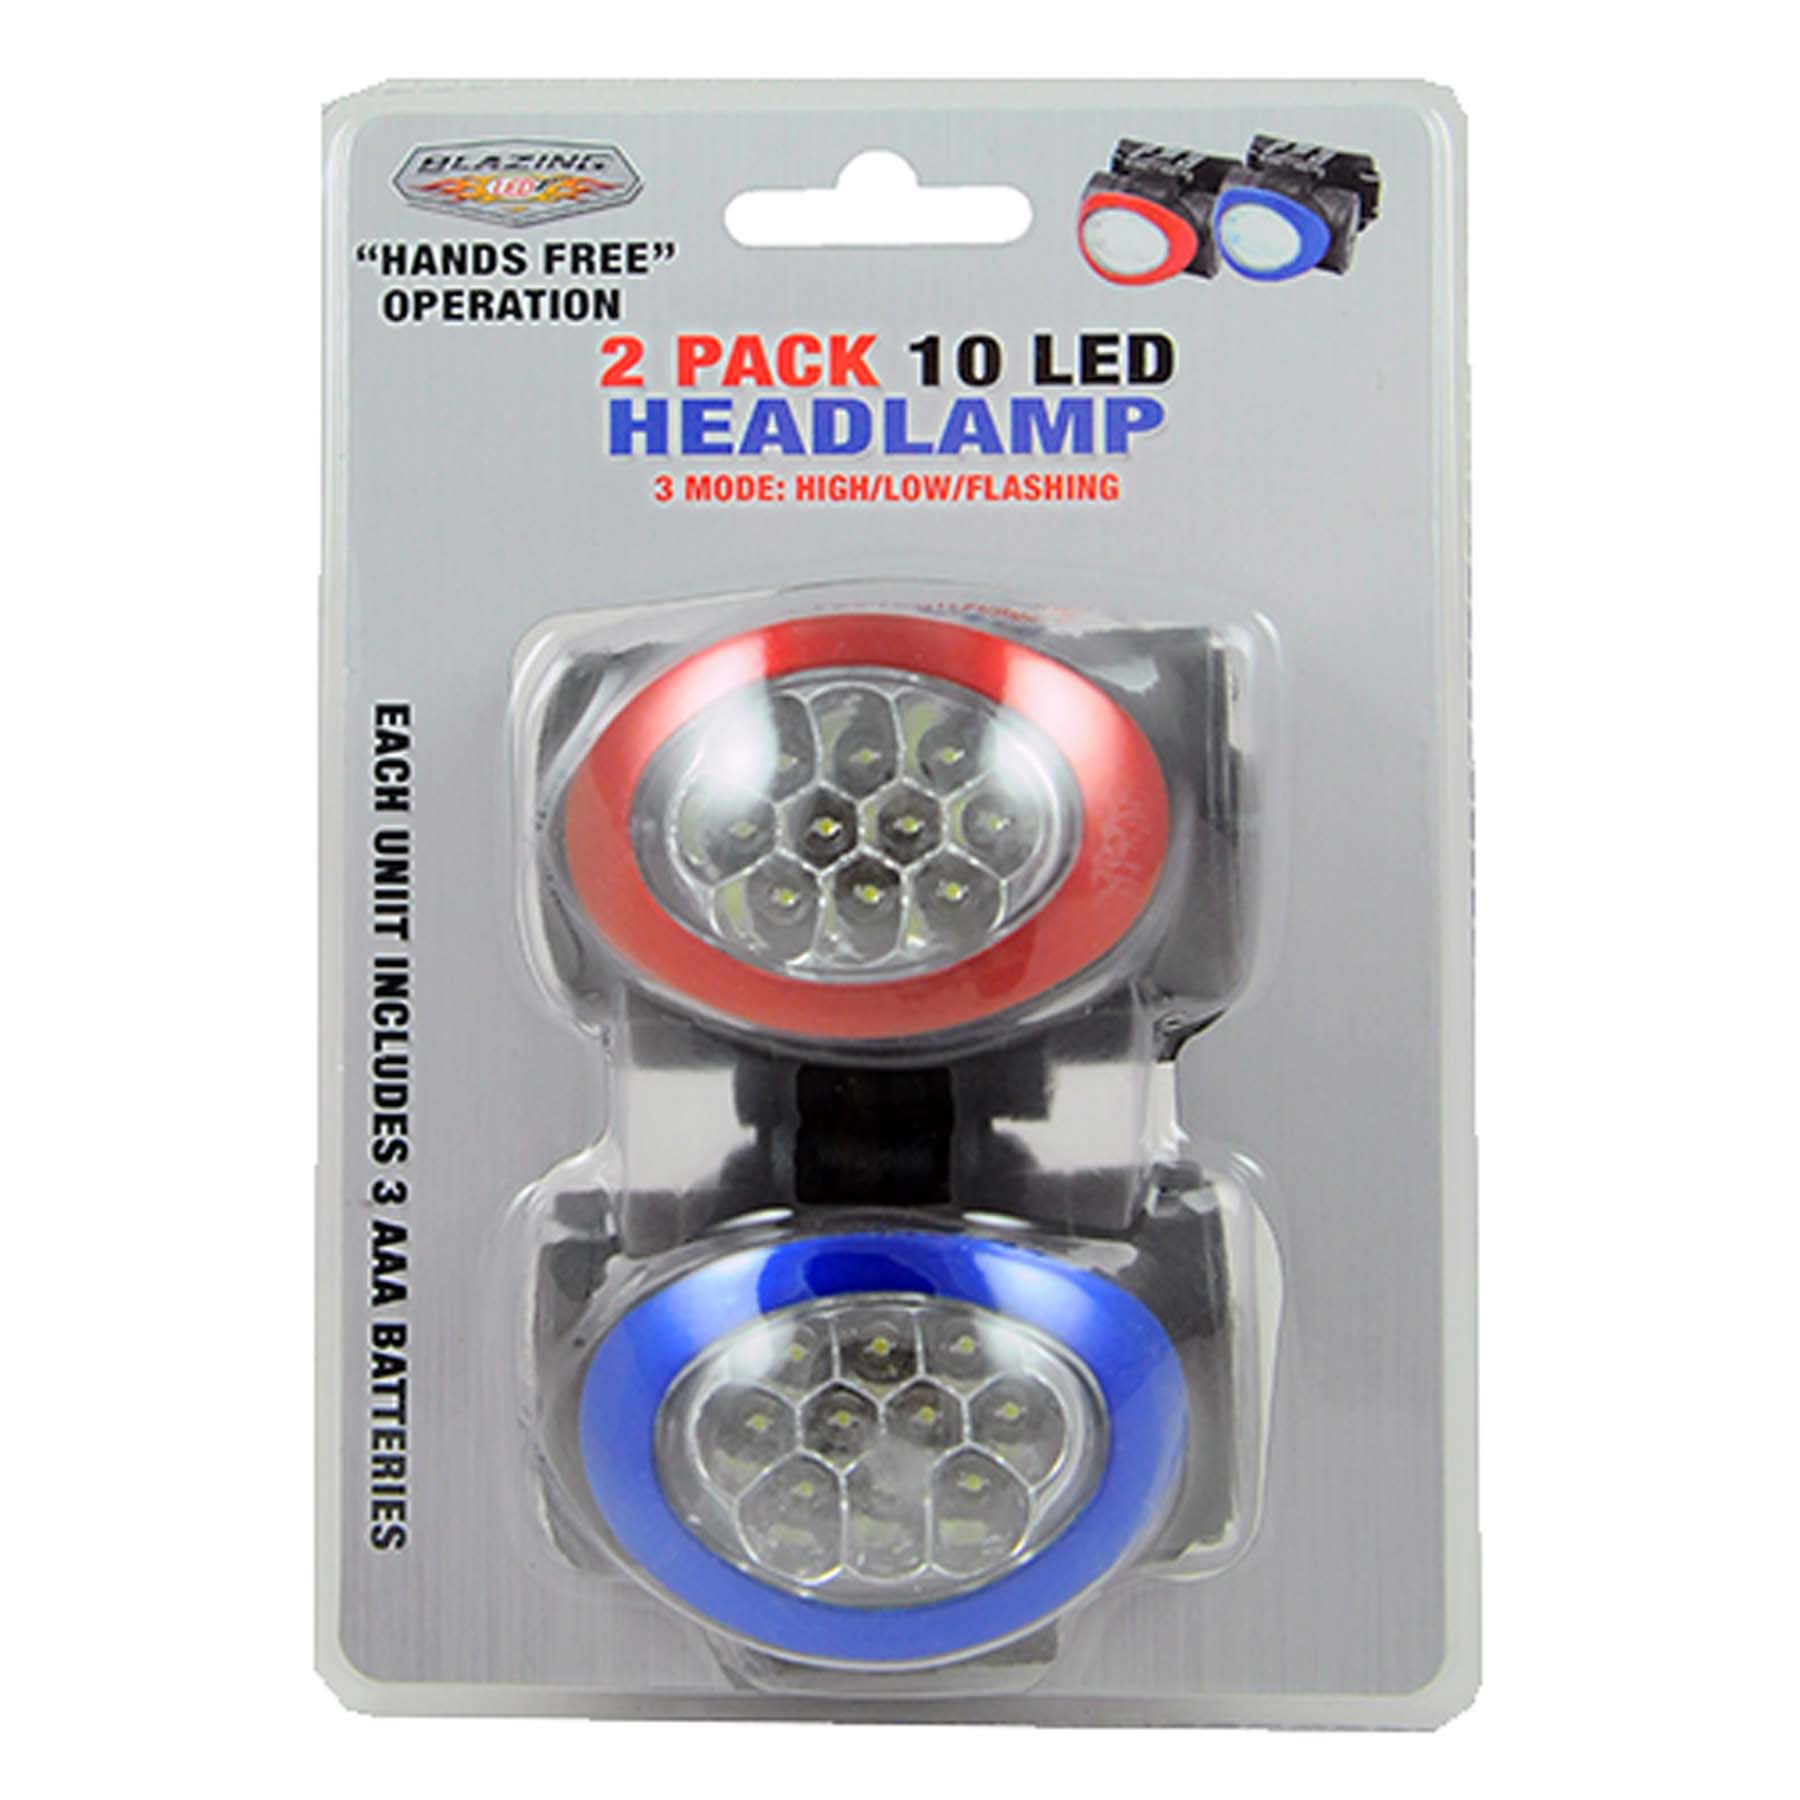 2PK 10 LED Headlamp 15